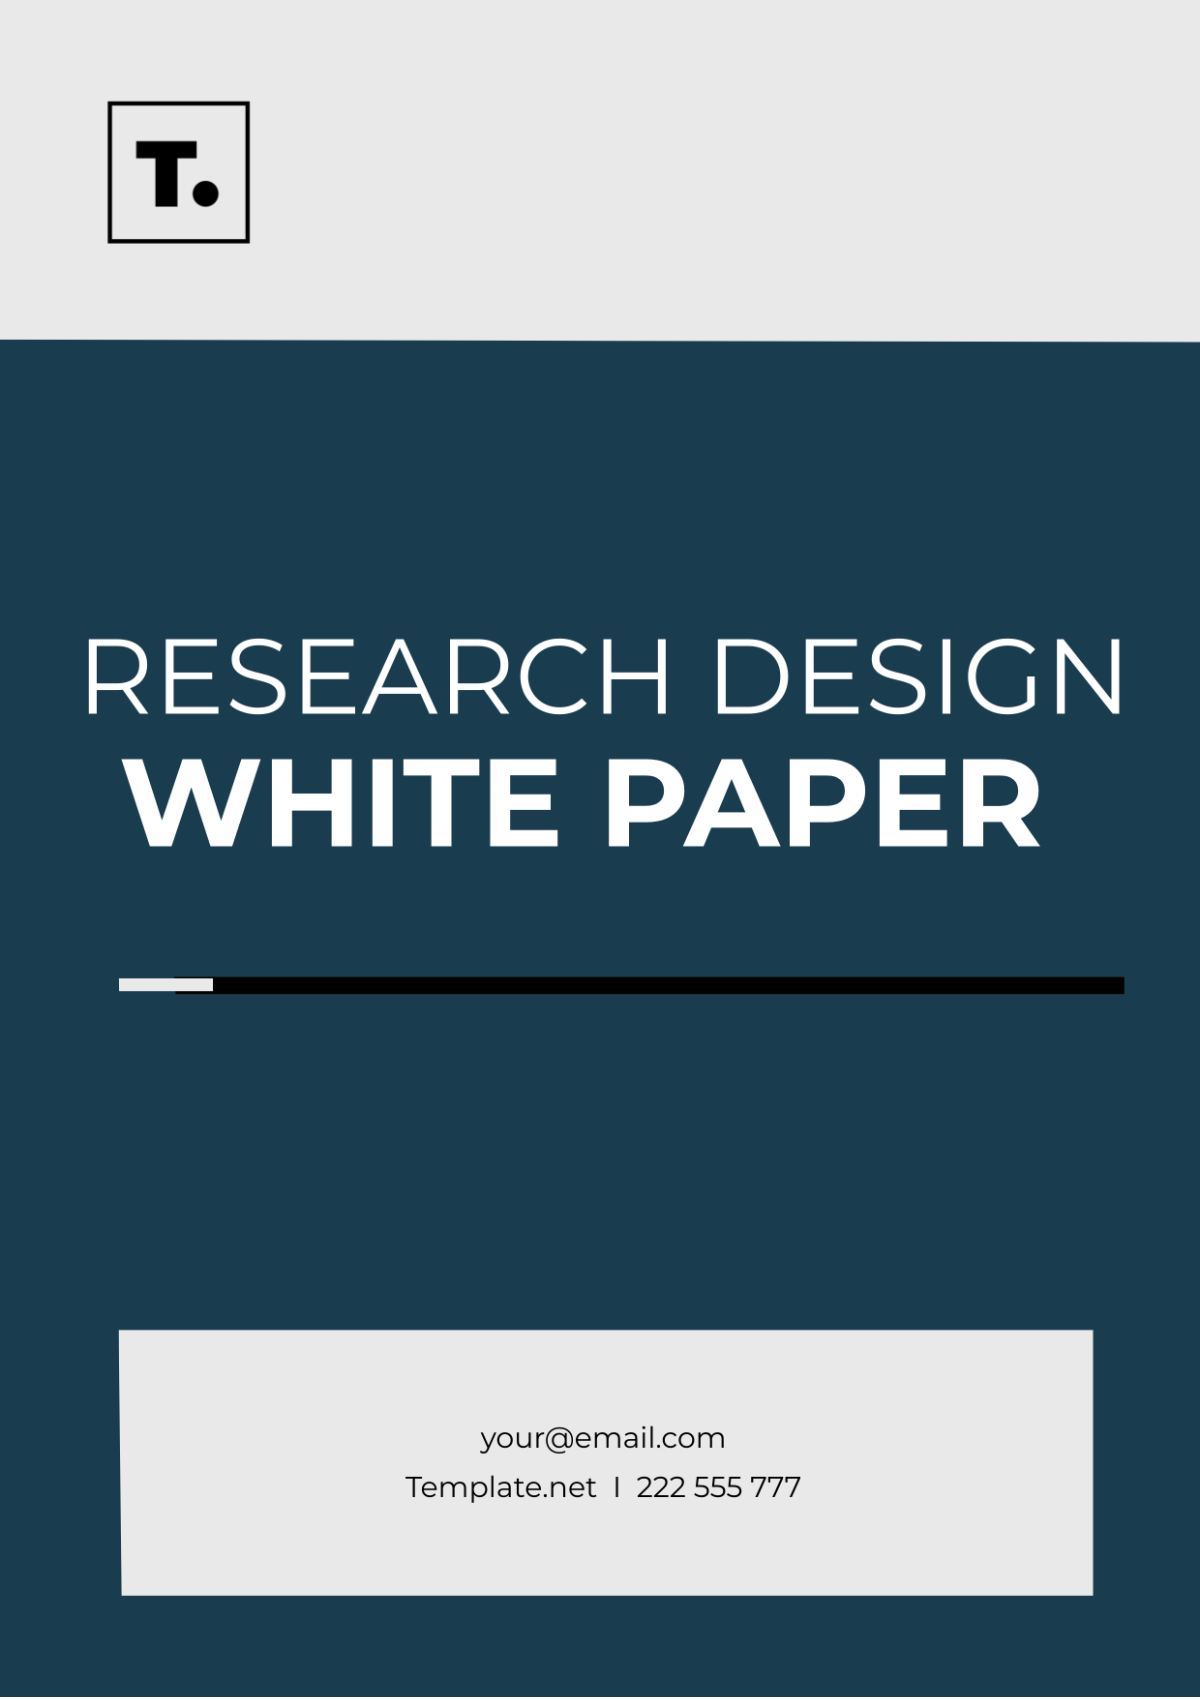 Free Research Design White Paper Template